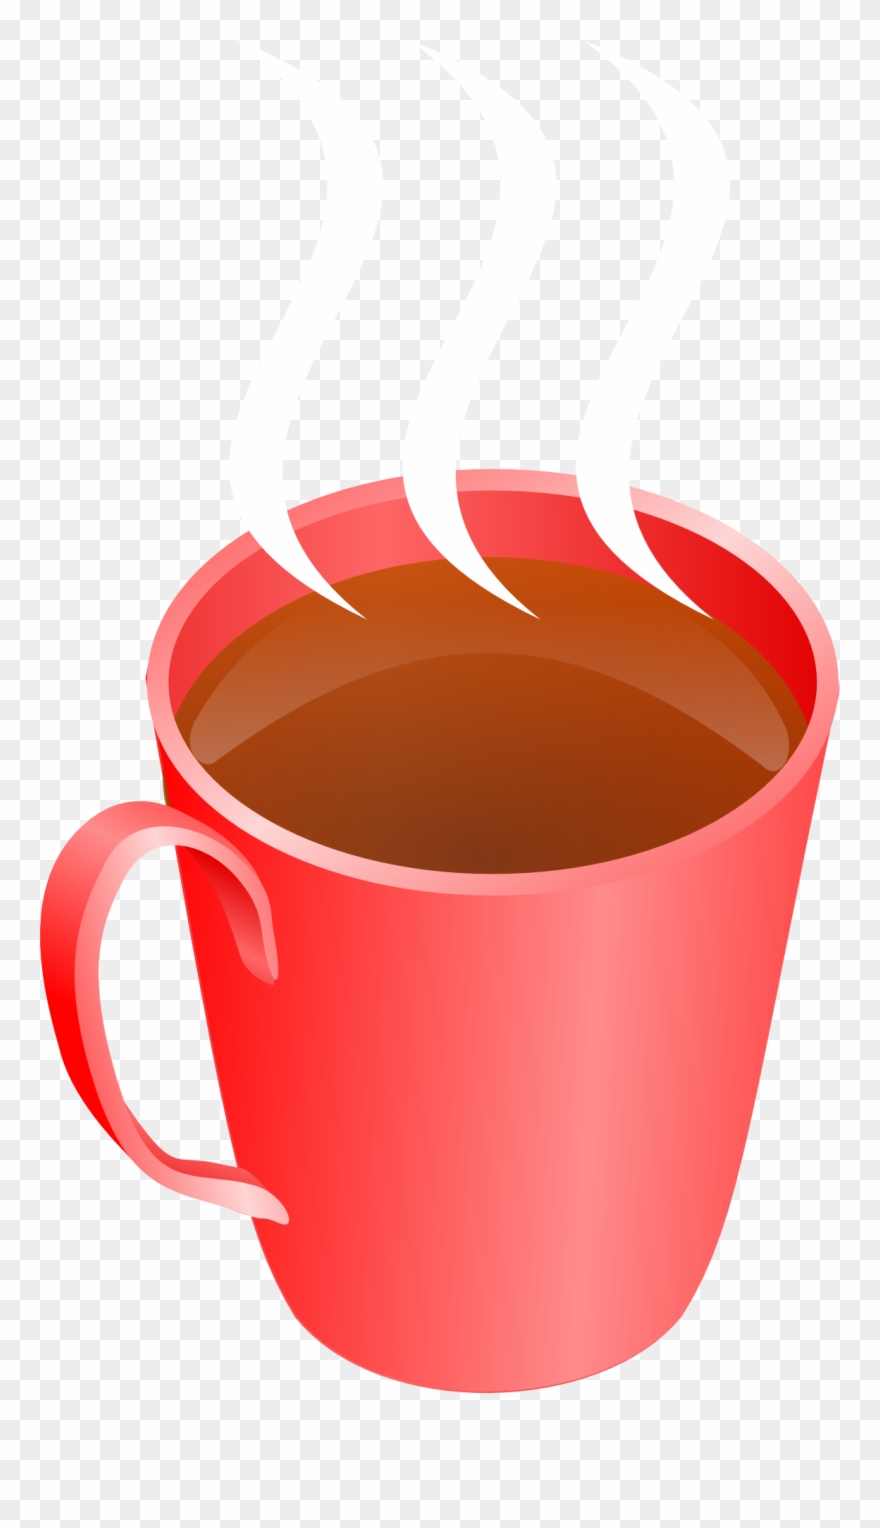 mug clipart hot drink